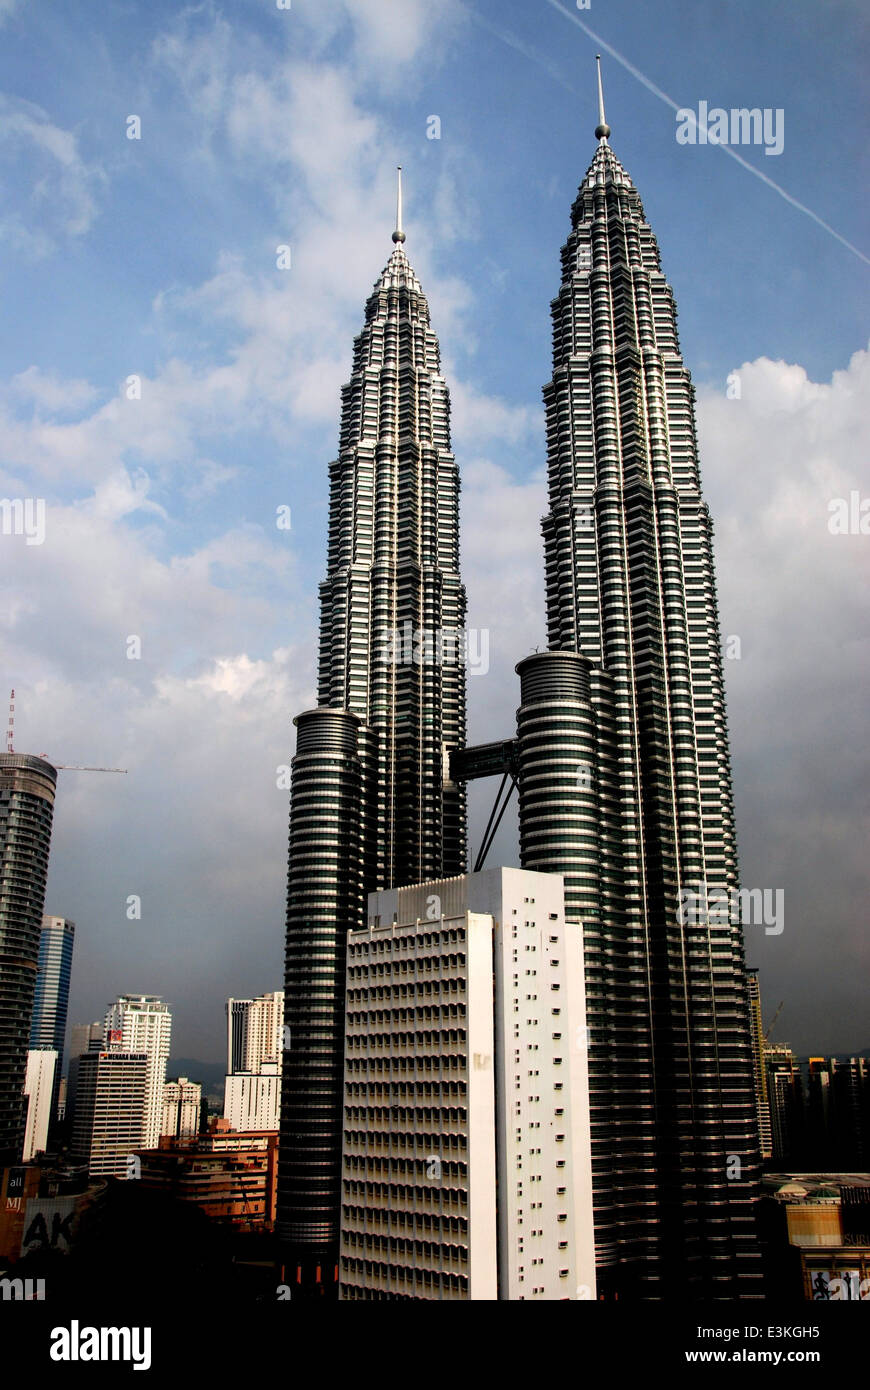 KUALA LUMPUR, MALAYASIA: The twin Petronas Towers soar to a height of 451.9 metres over the city Stock Photo